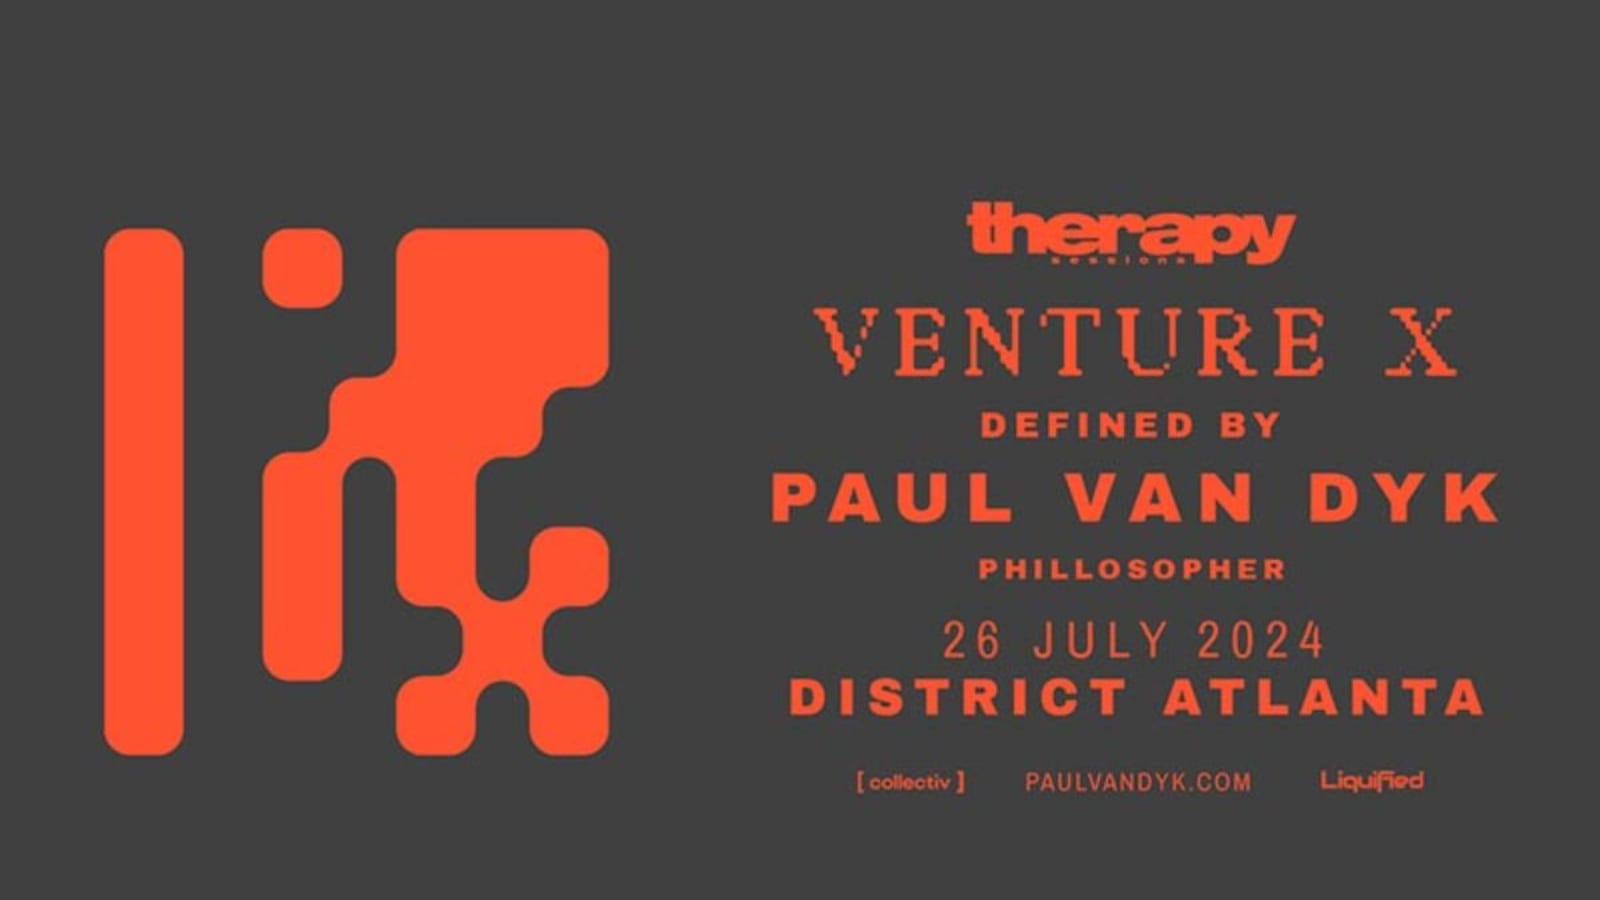 Paul Van Dyk - Venture X Live Event Concept